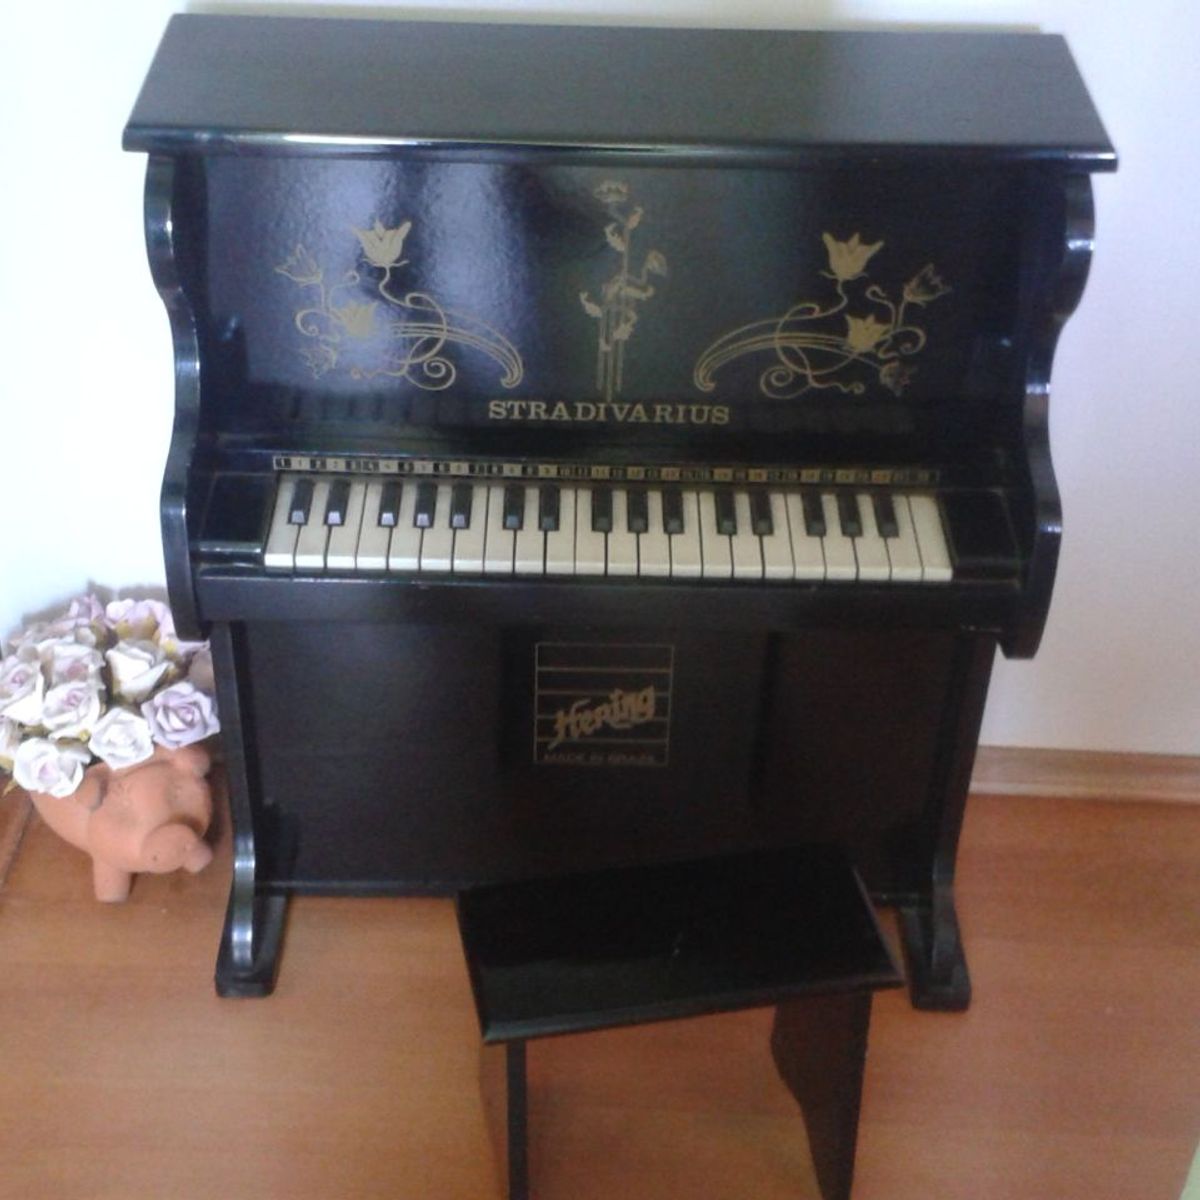 Piano Retro Infantil | Item Infantil Hering Usado 59668747 | enjoei